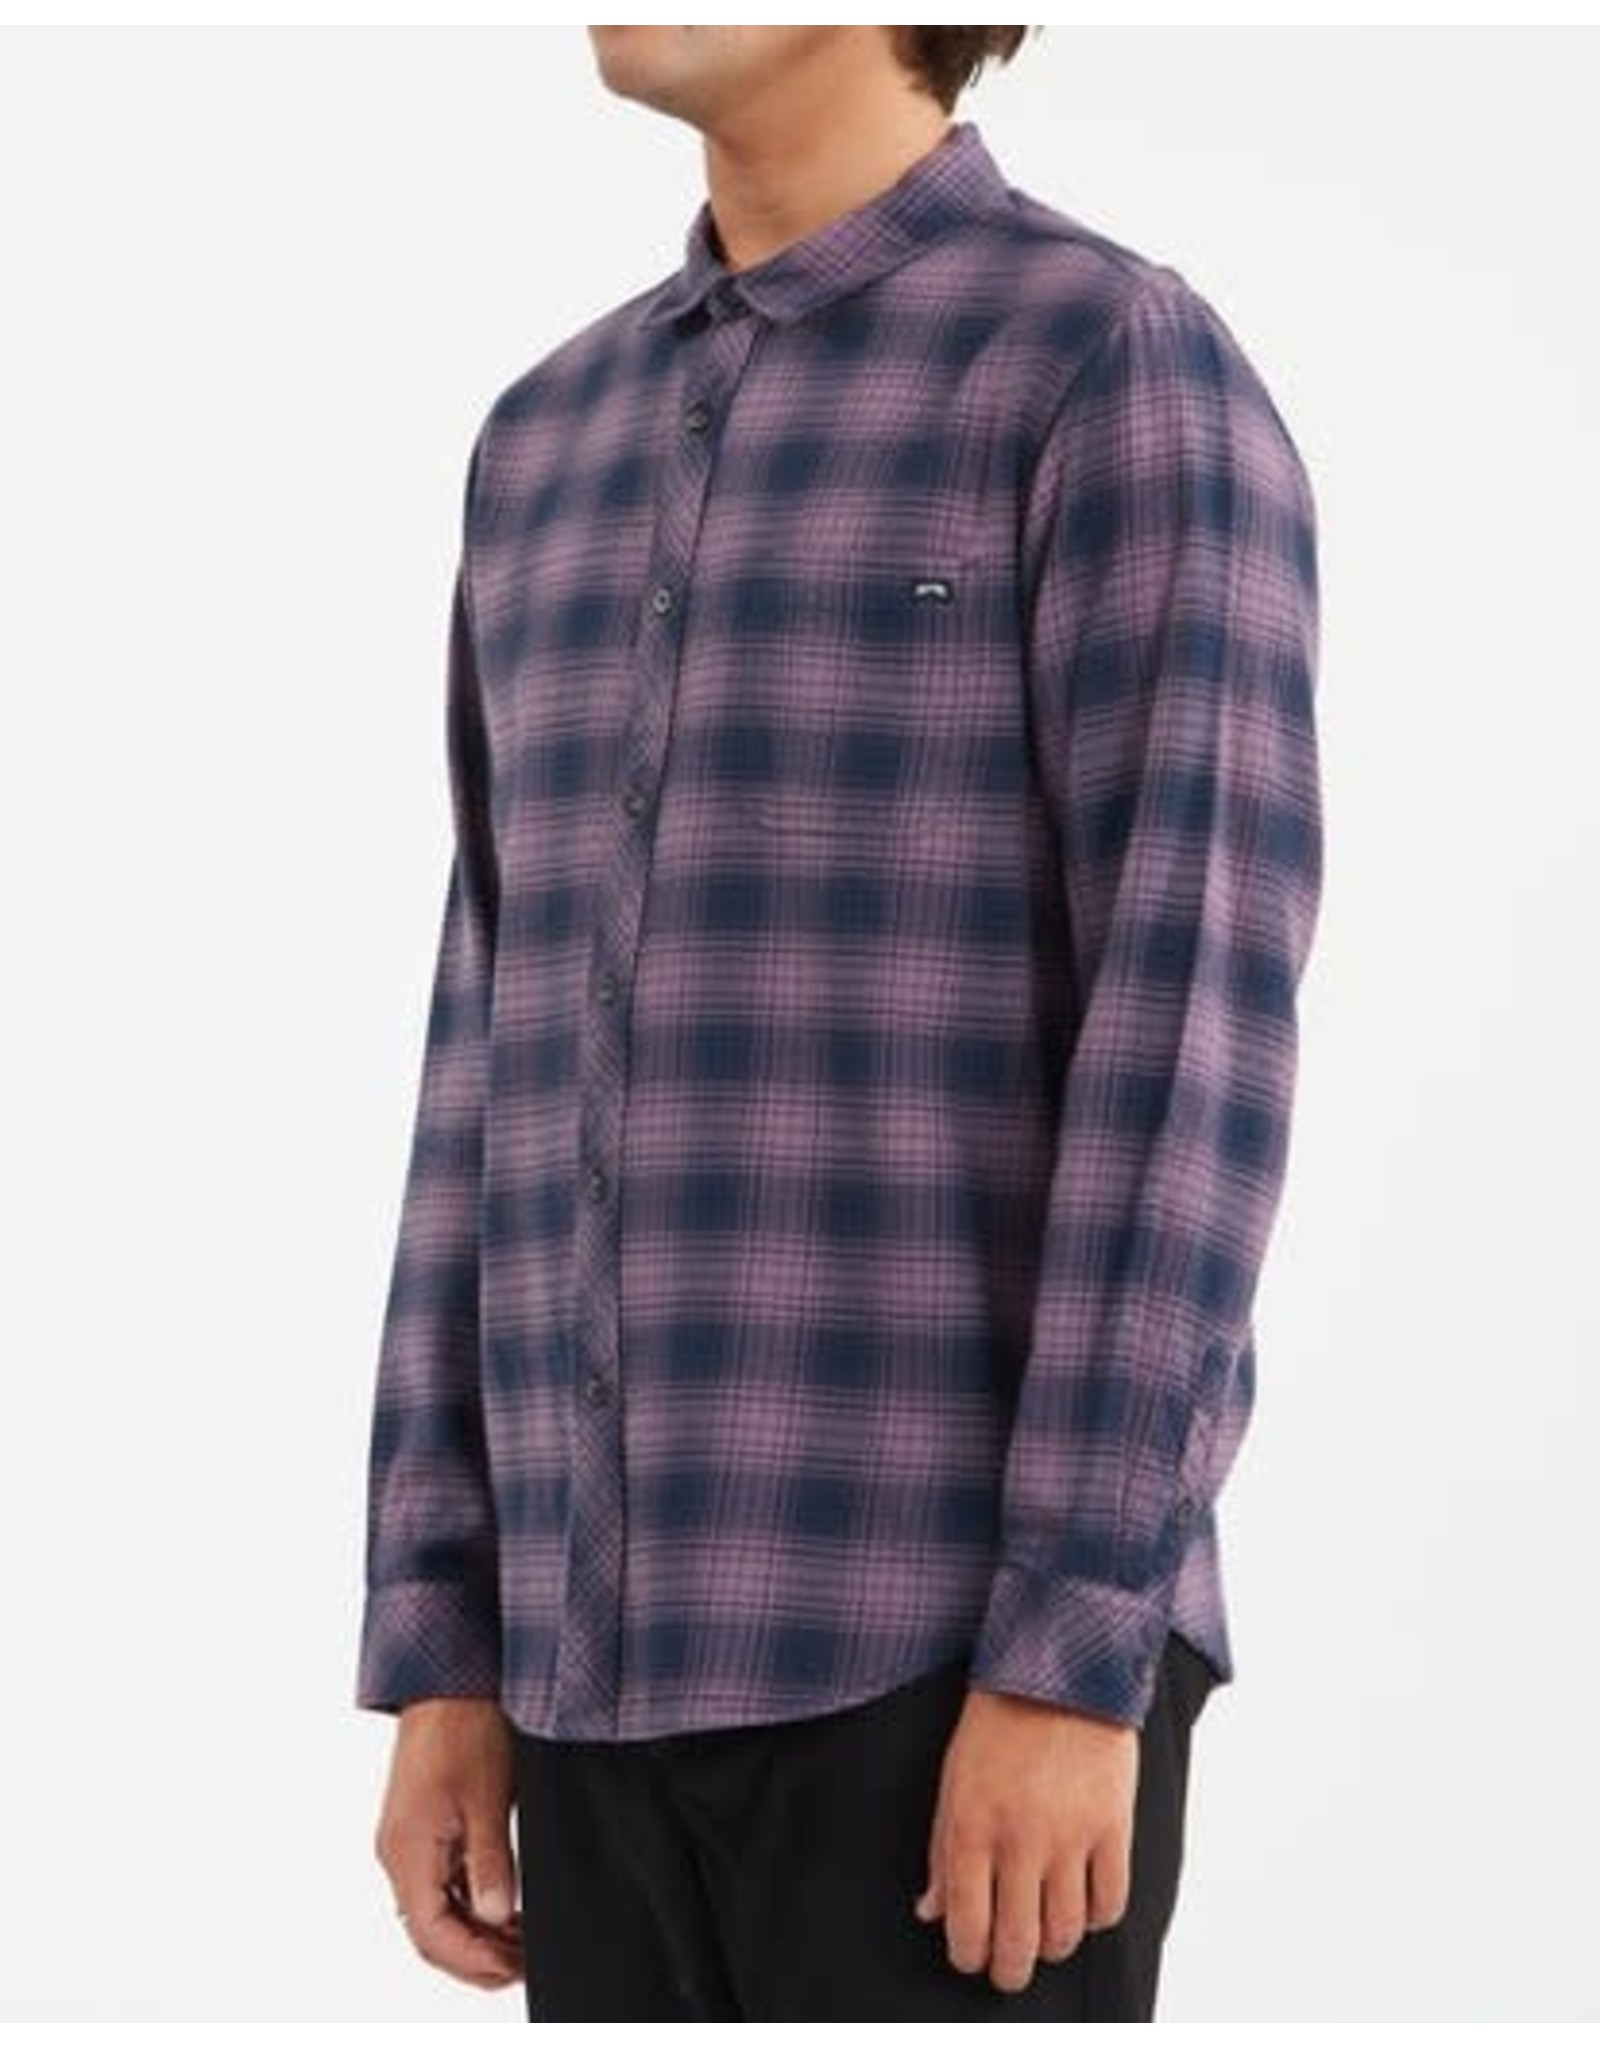 BILLABONG Coastline Flannel Shirt PURPLE HAZE (phz)